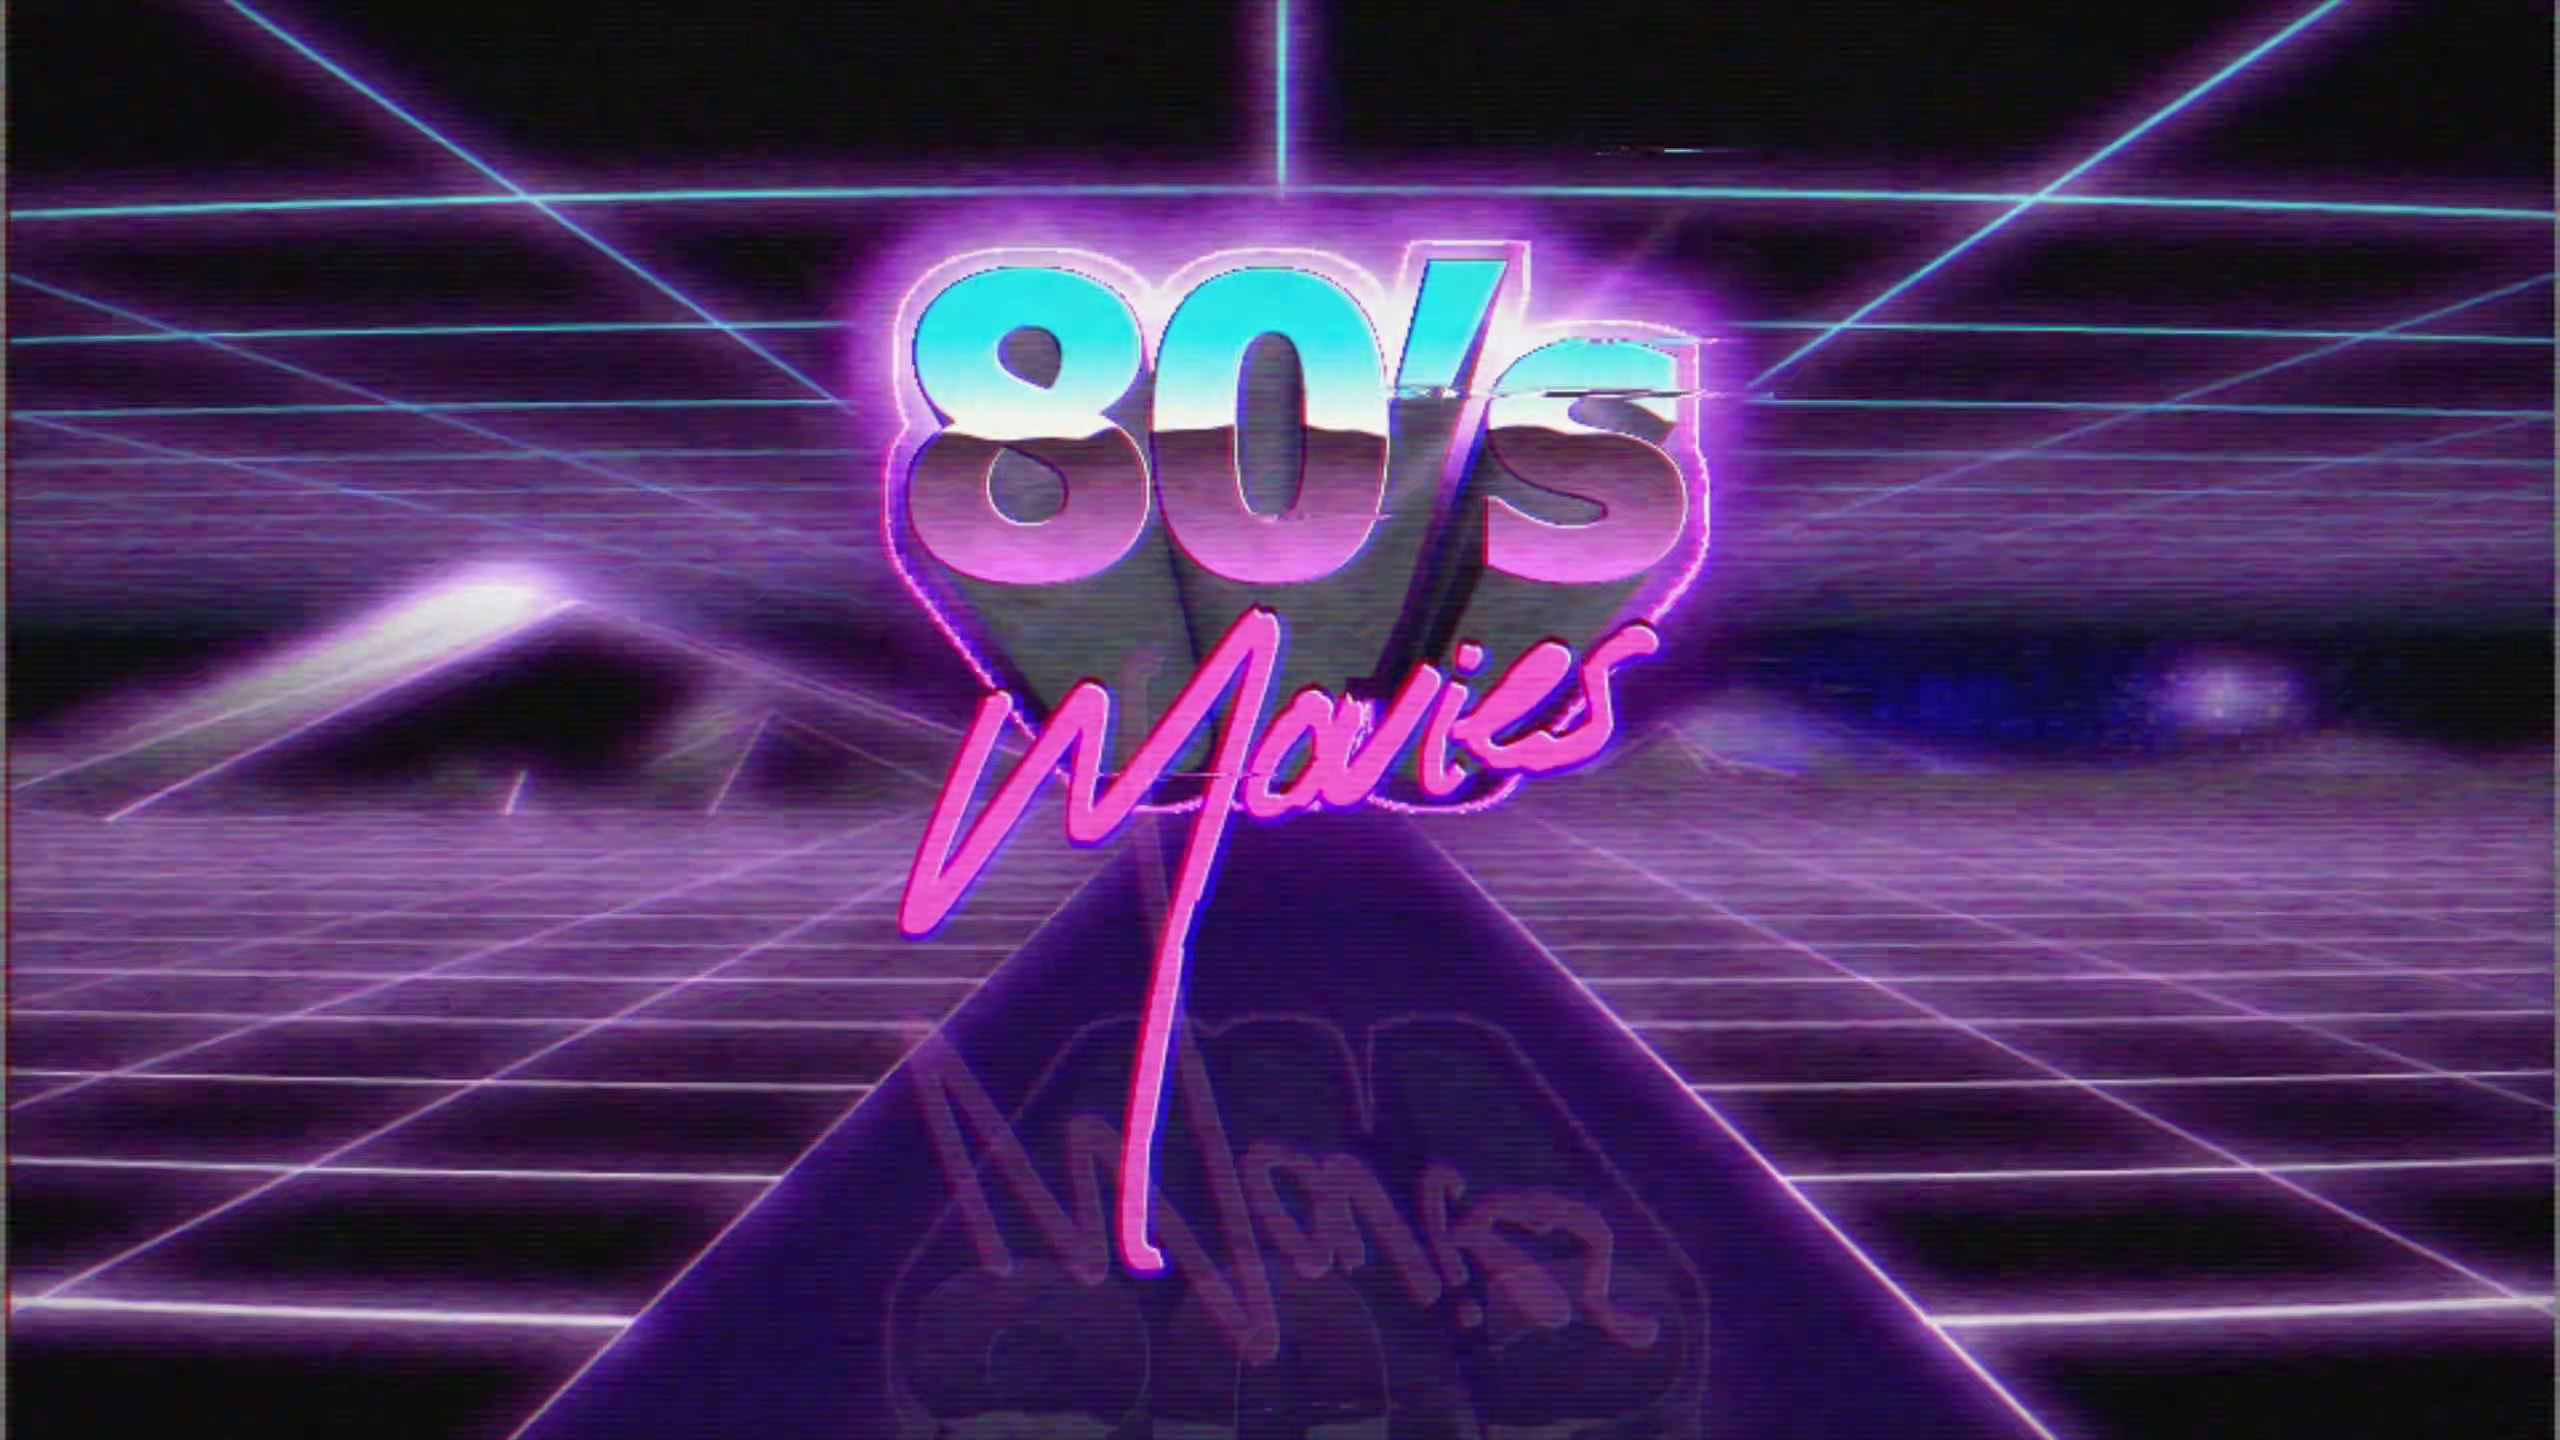 Playlist 80's Movies